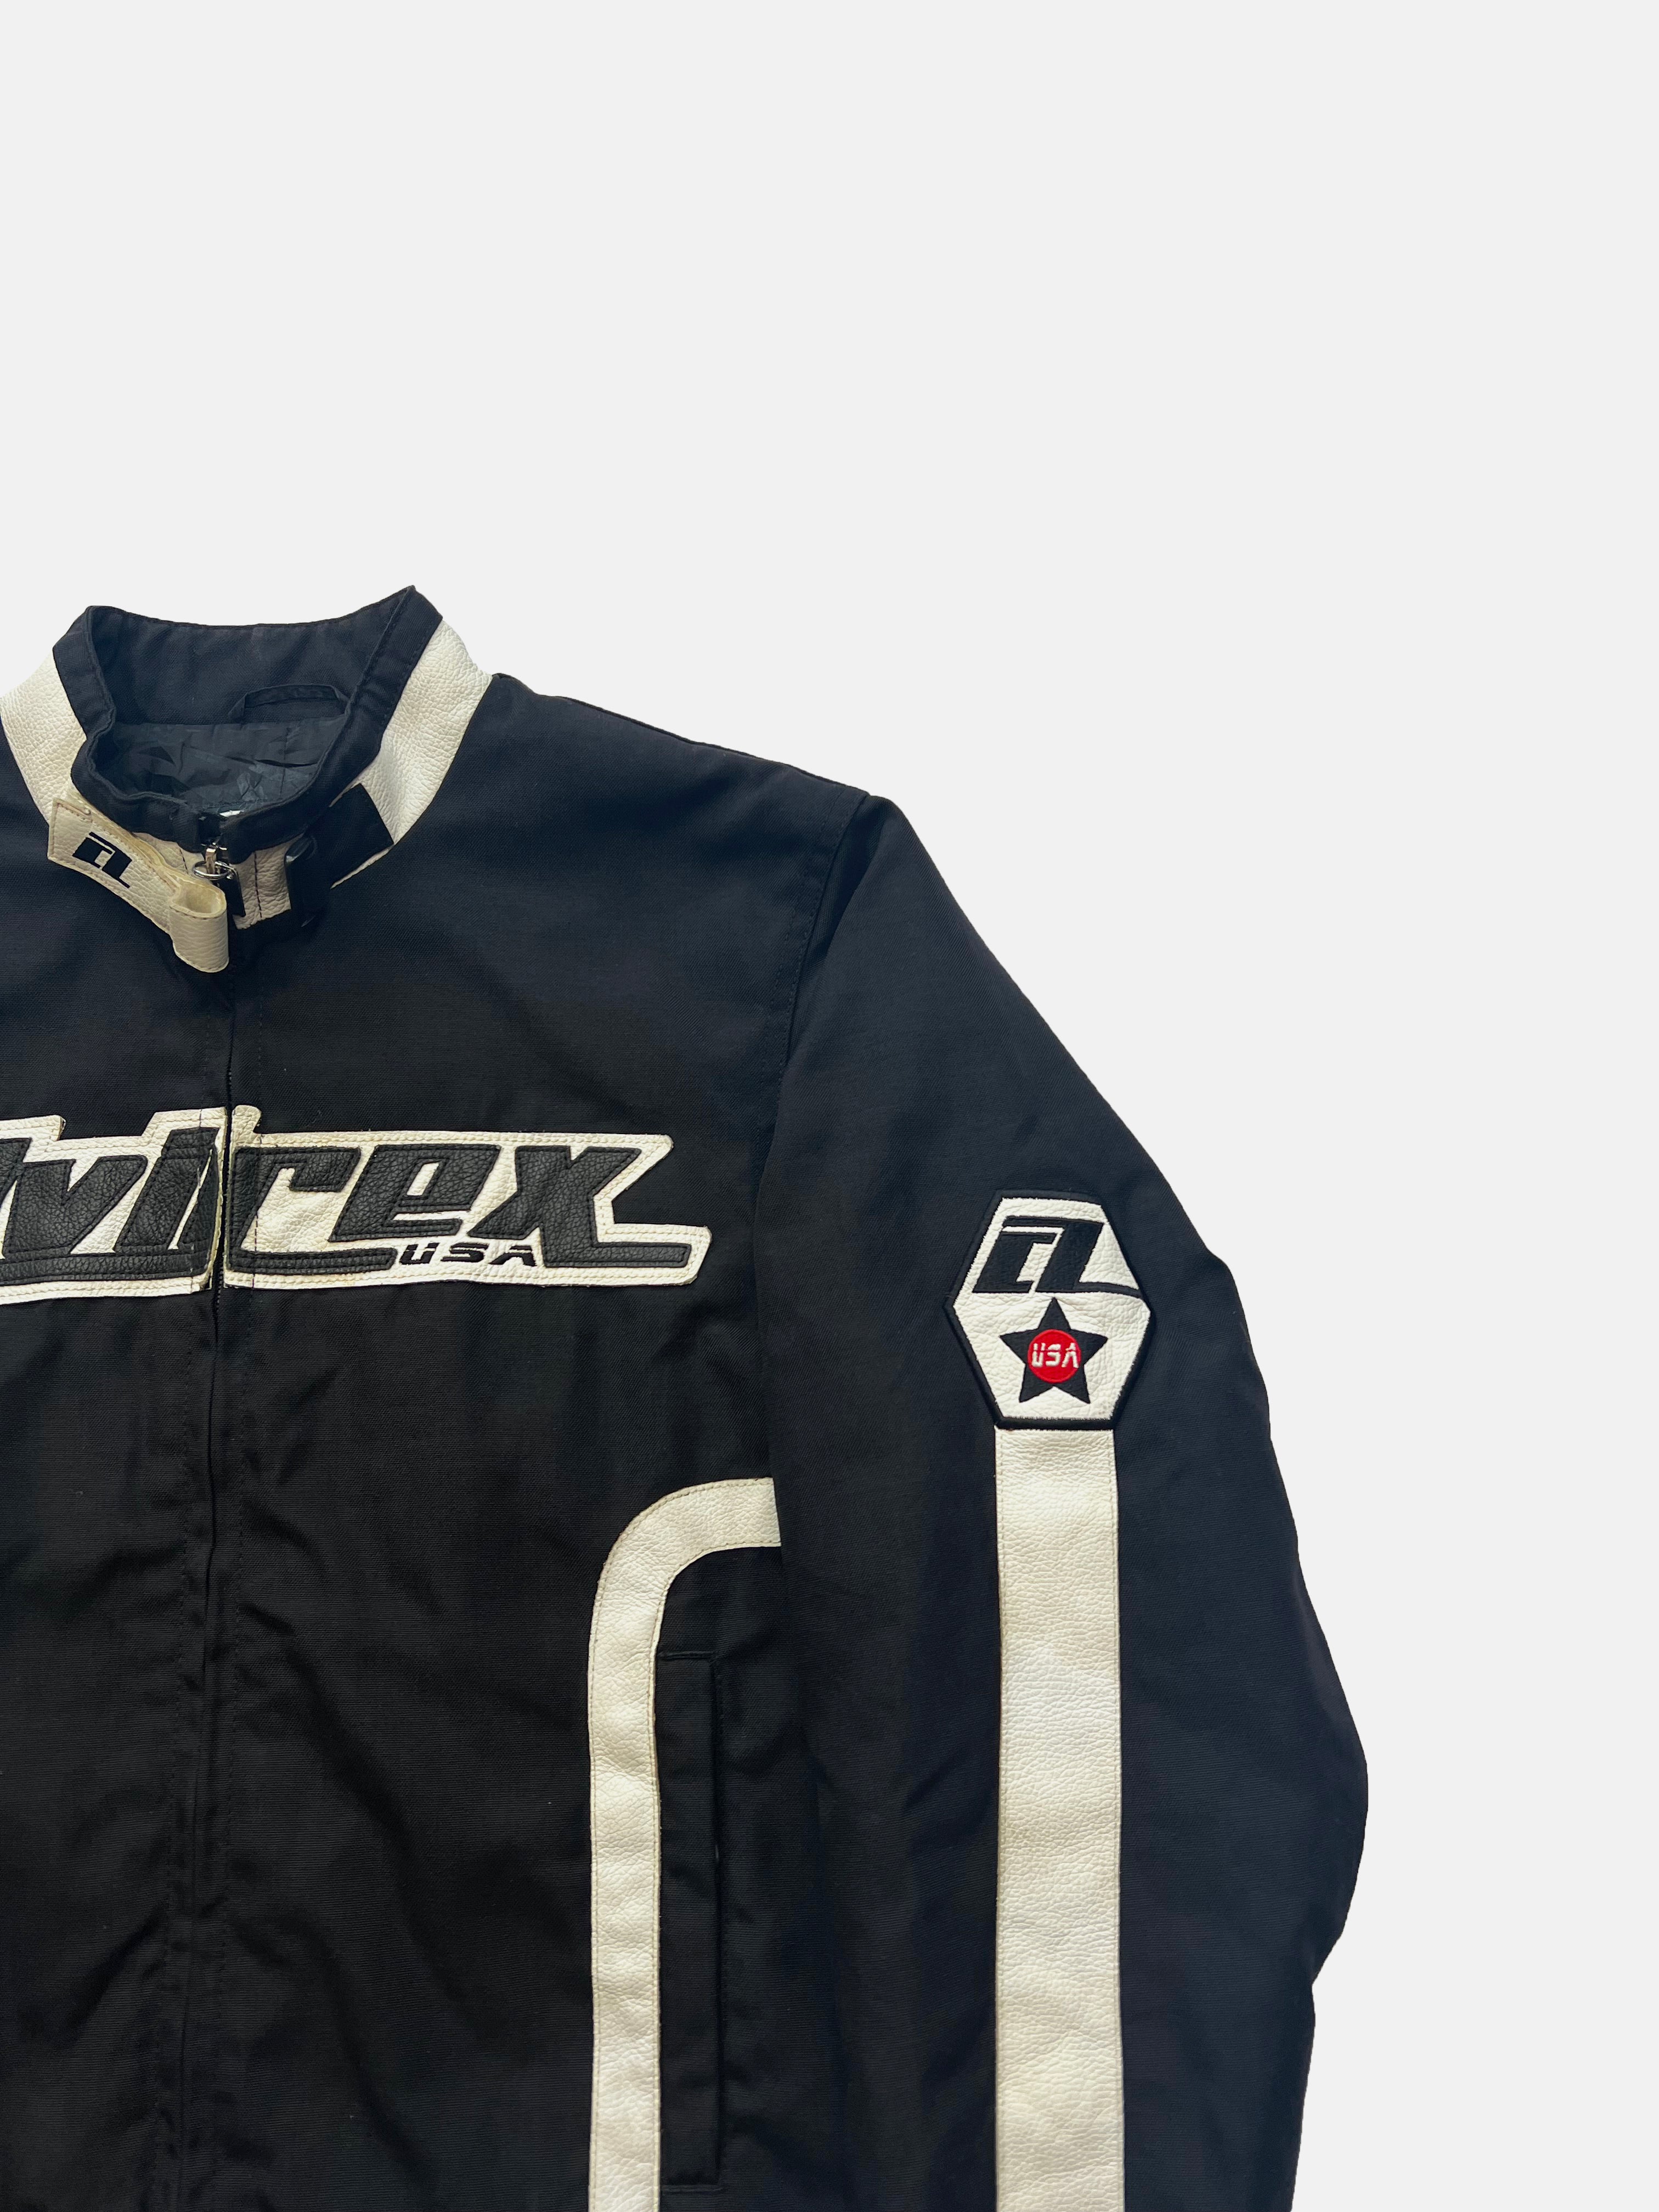 Avirex Black Motorcycle Jacket 90's